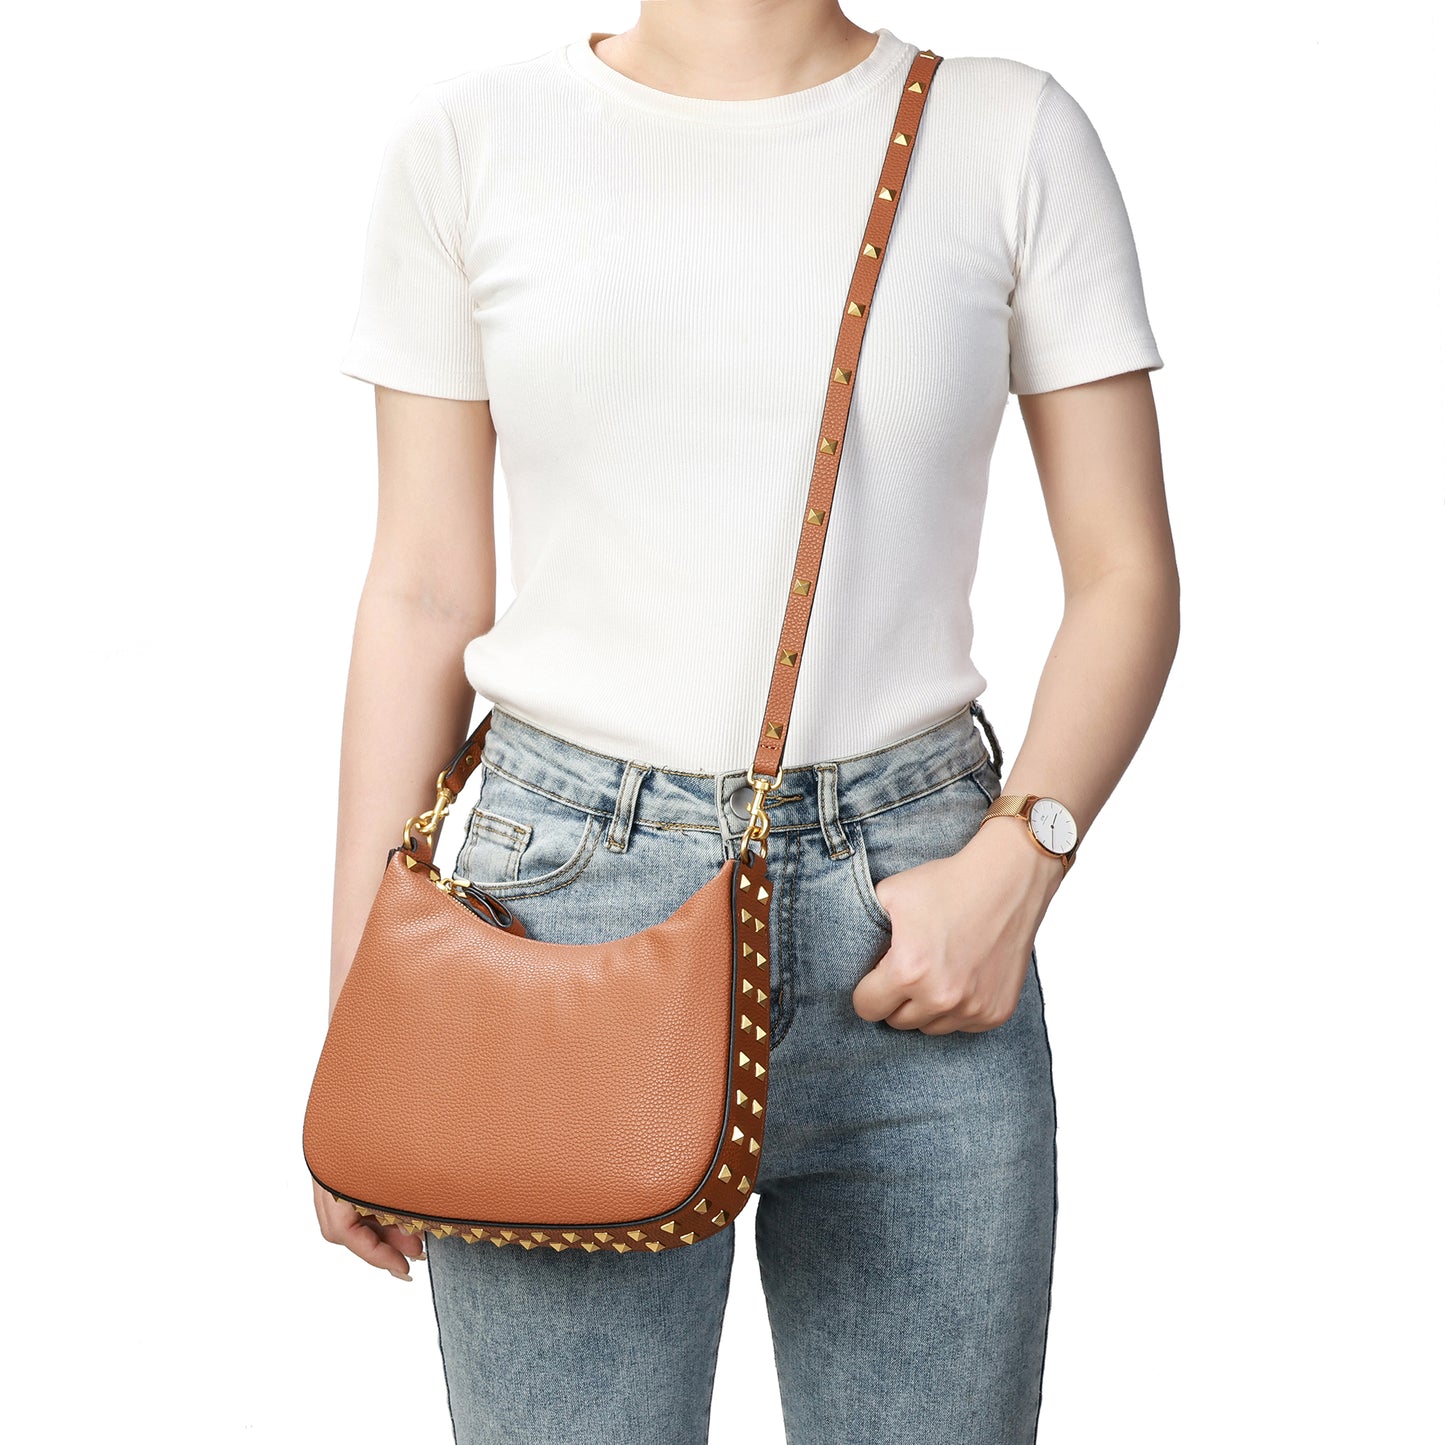 Full-Grain Studded Leather Shoulder/Messenger Bag